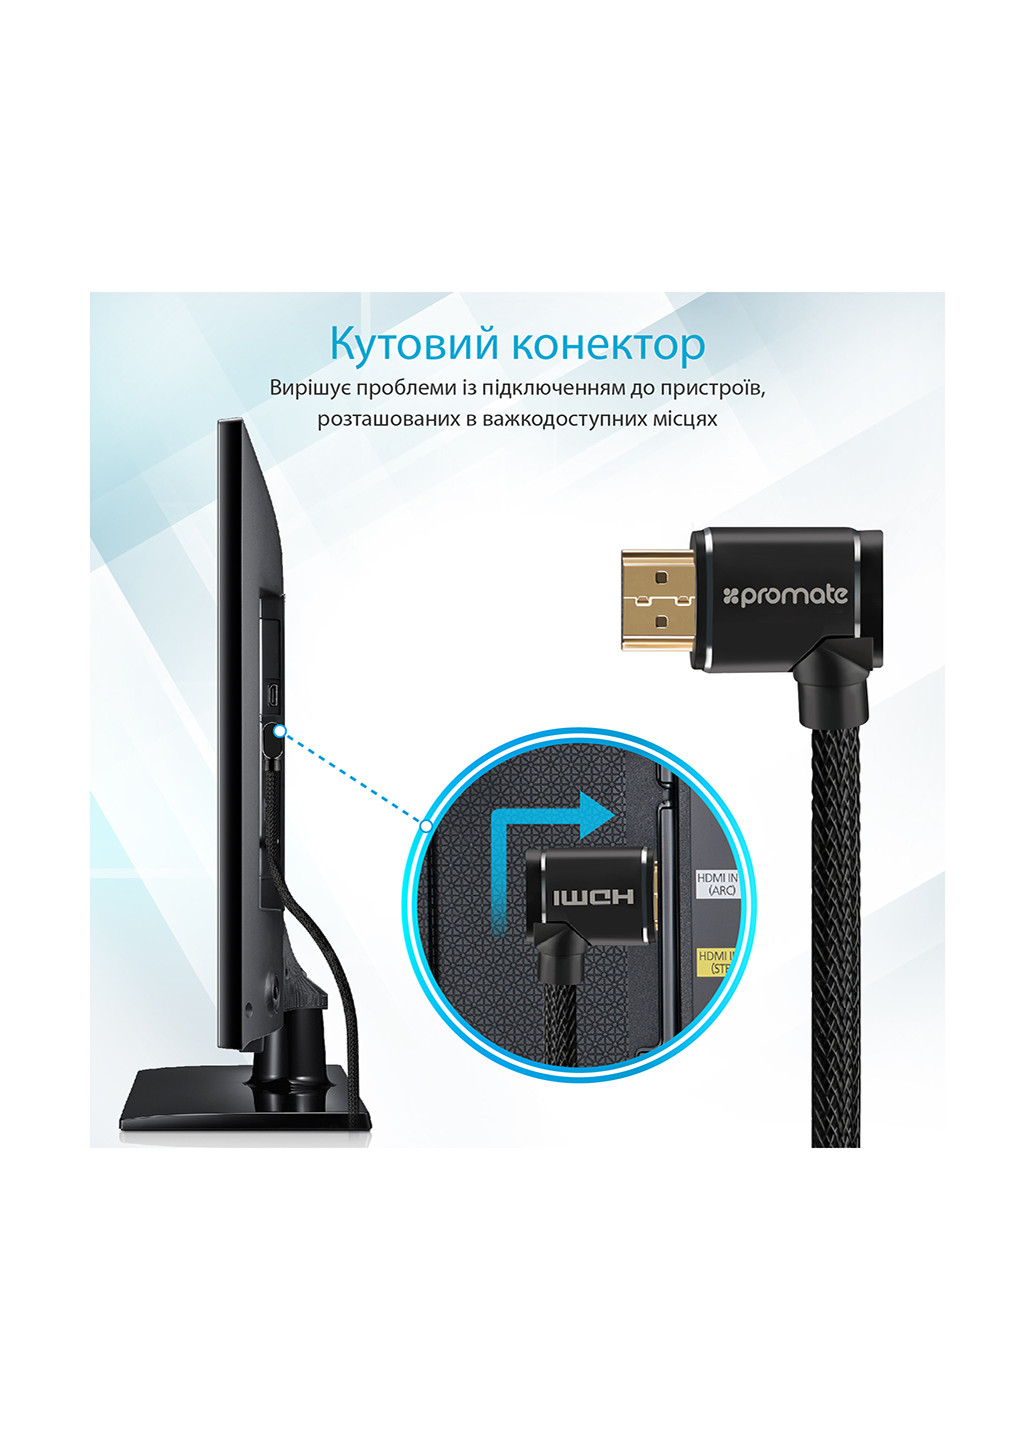 HDMI кабель Black Promate prolink4k1-150 (132703834)